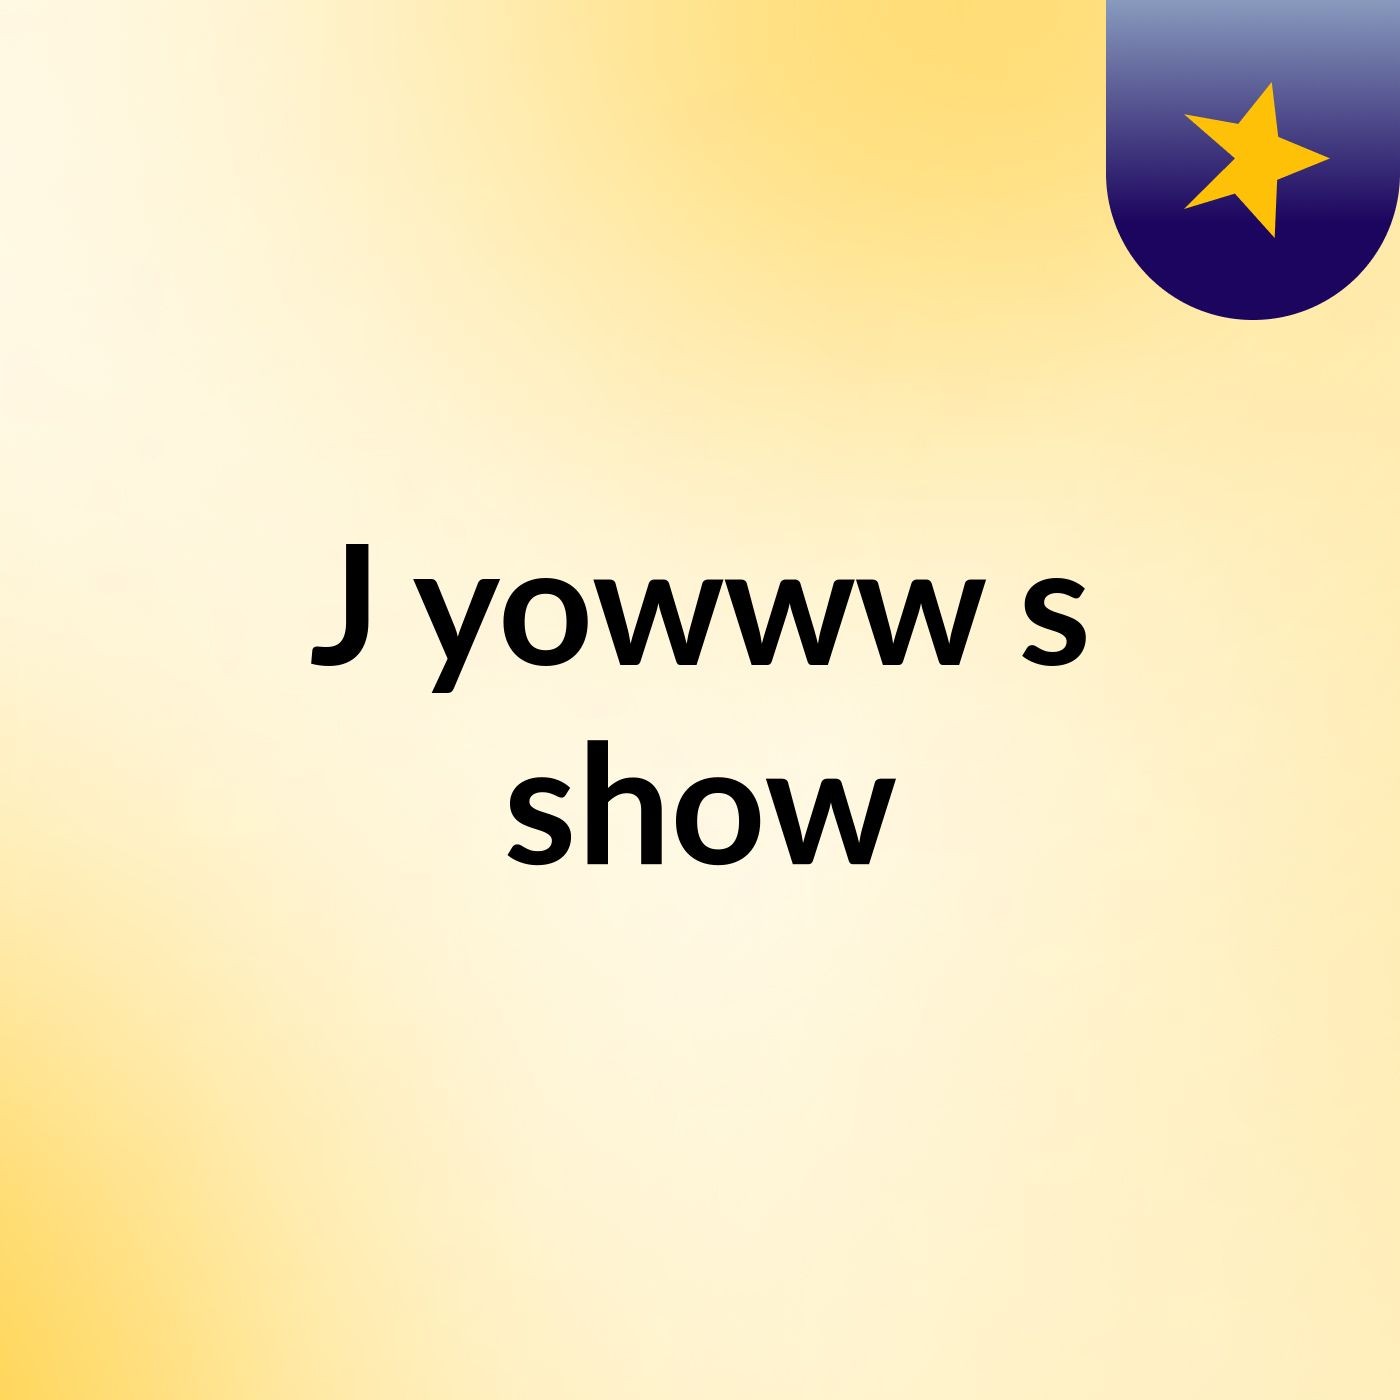 J yowww's show